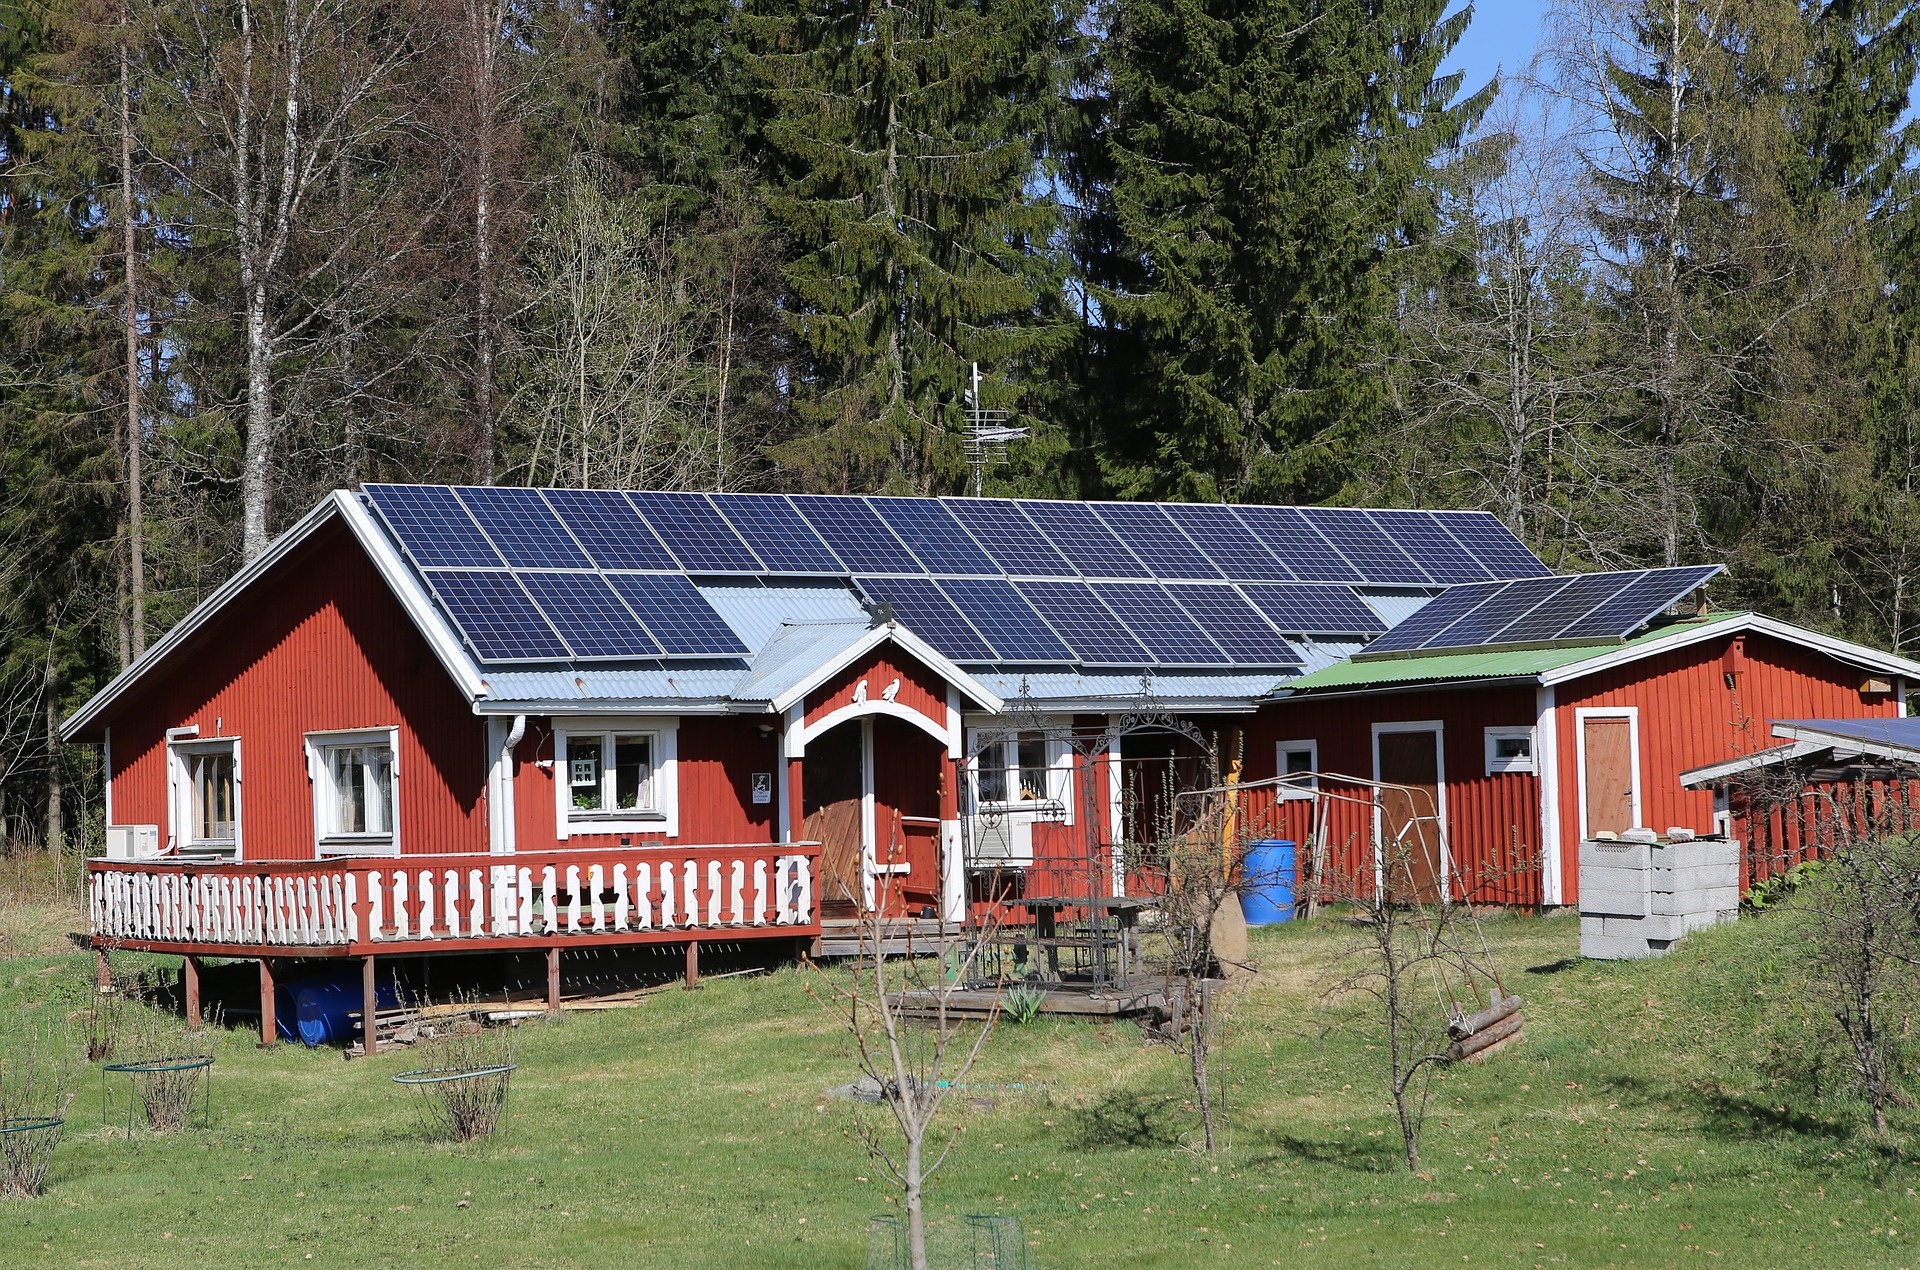 Residential Solar, Rooftop Solar, Solar Panels, YSG Solar